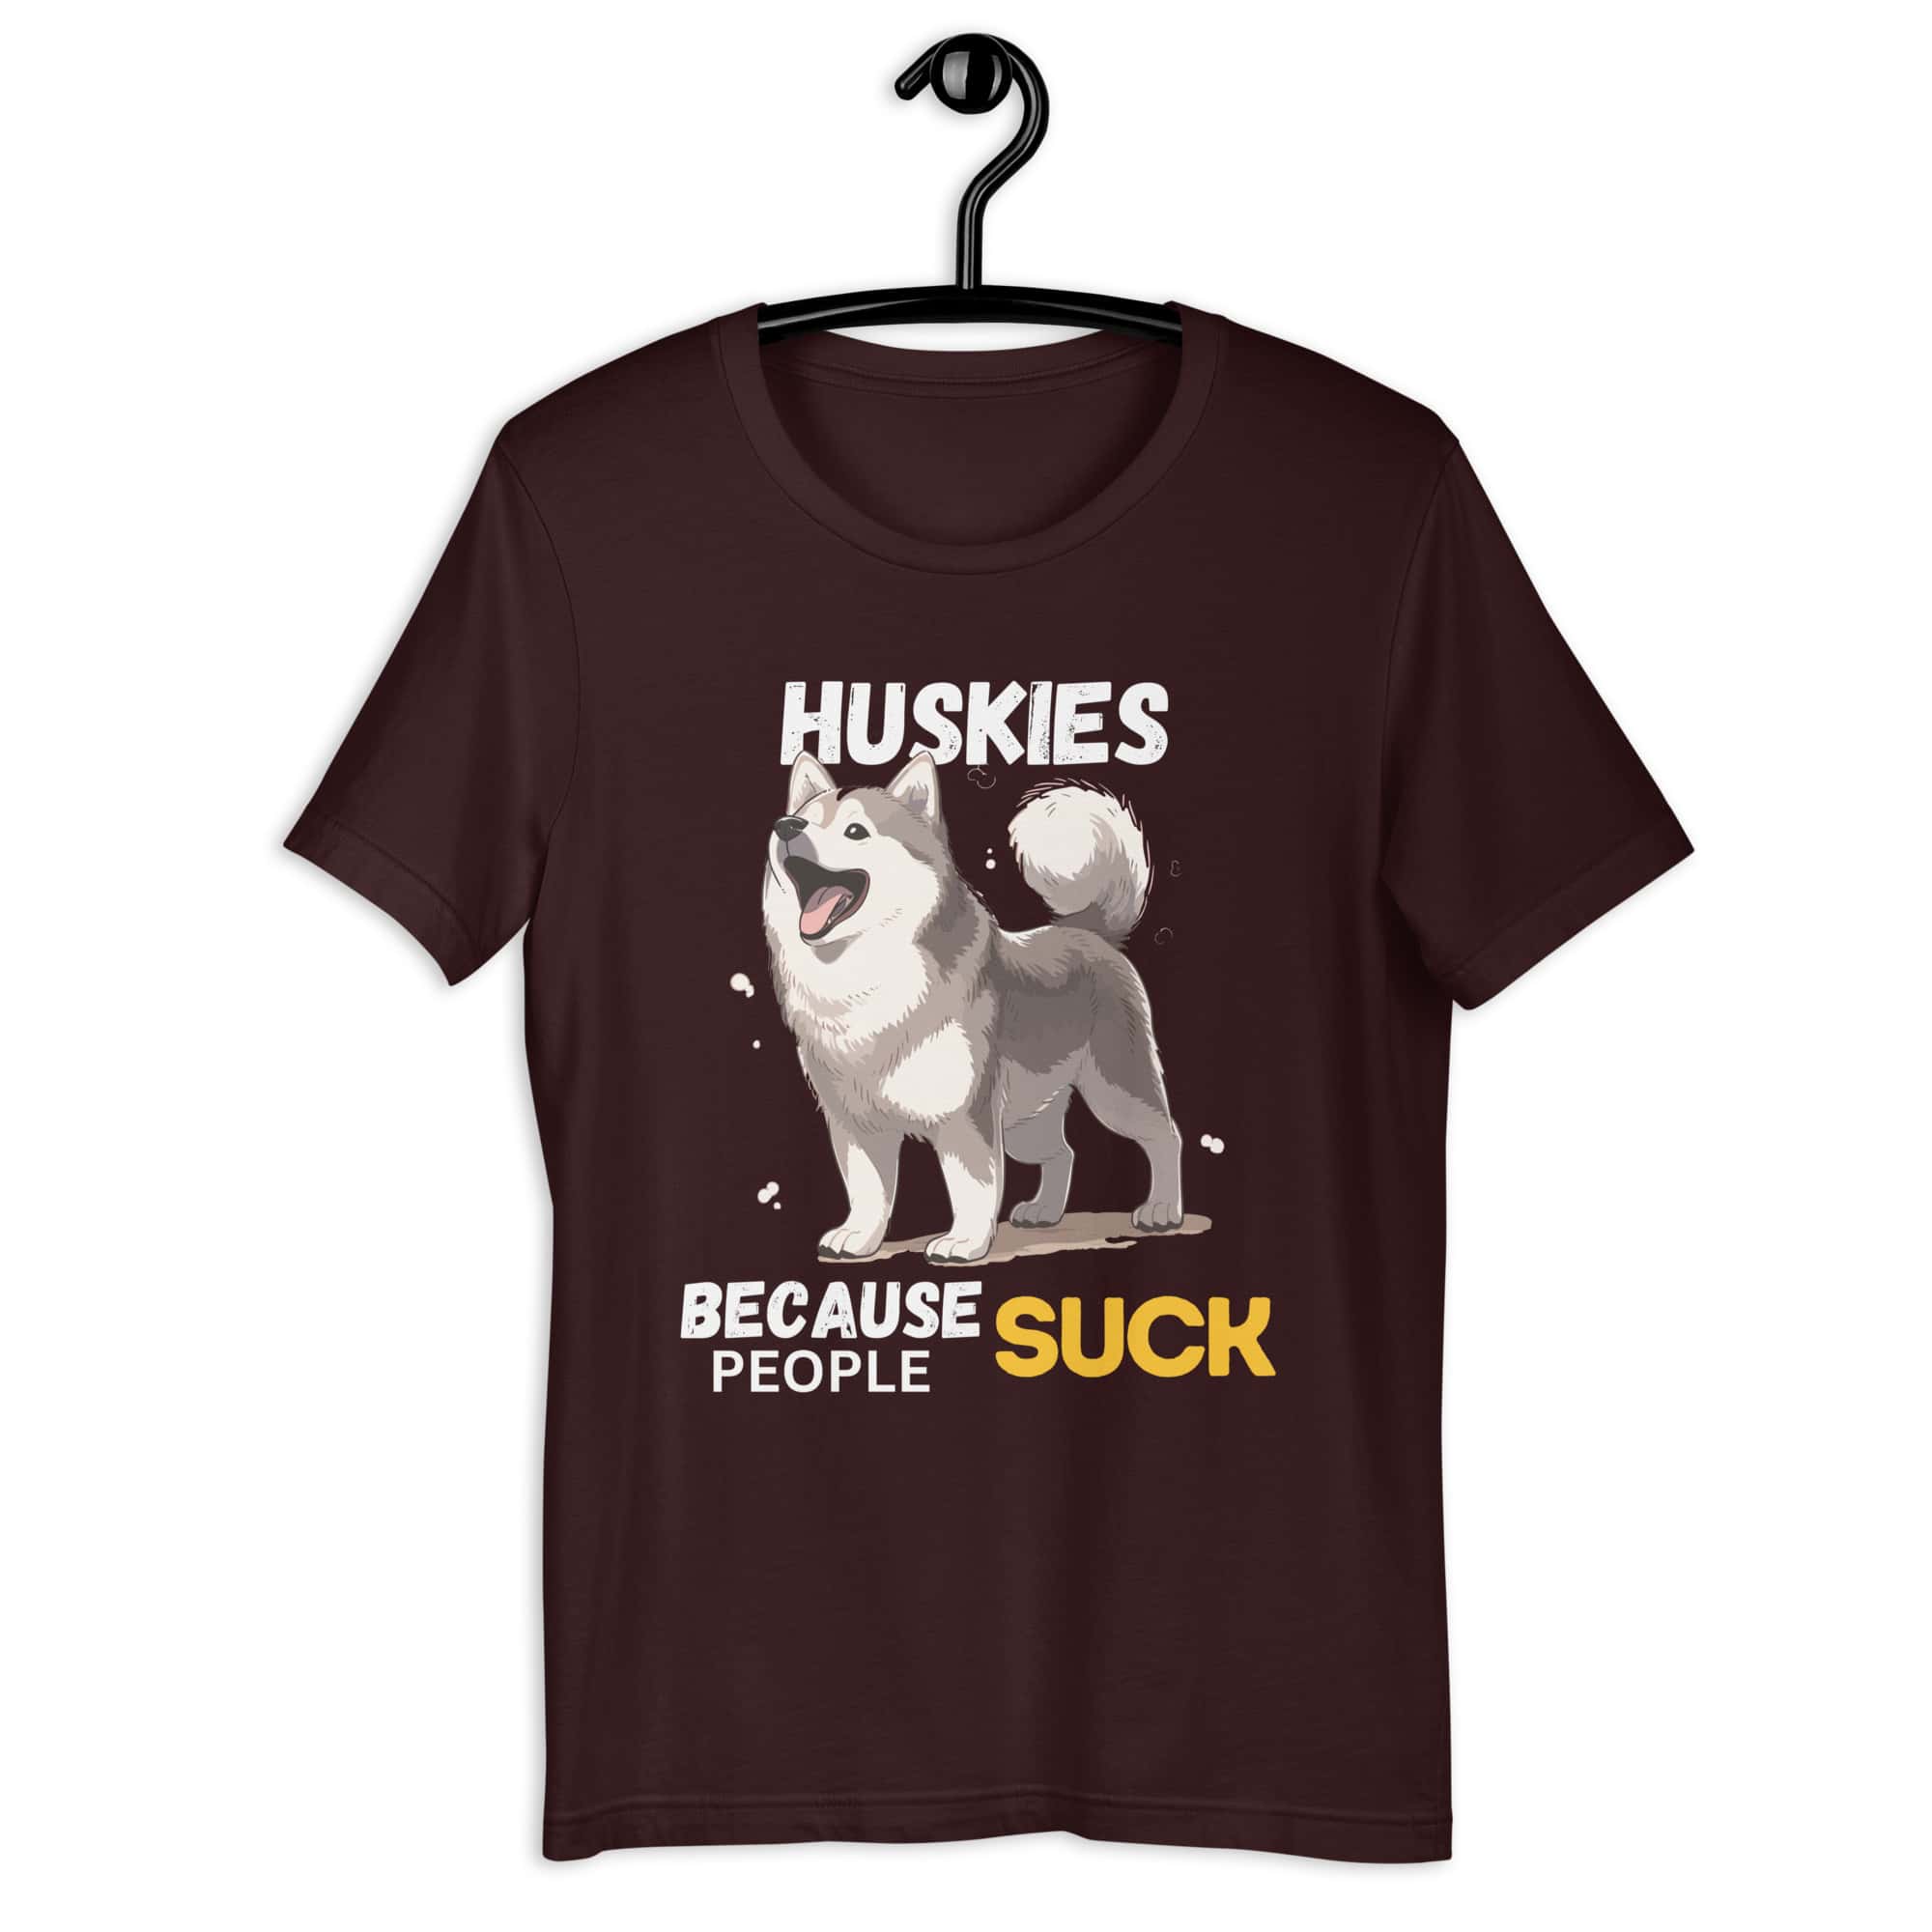 Huskies Because People Suck Unisex T-Shirt brown